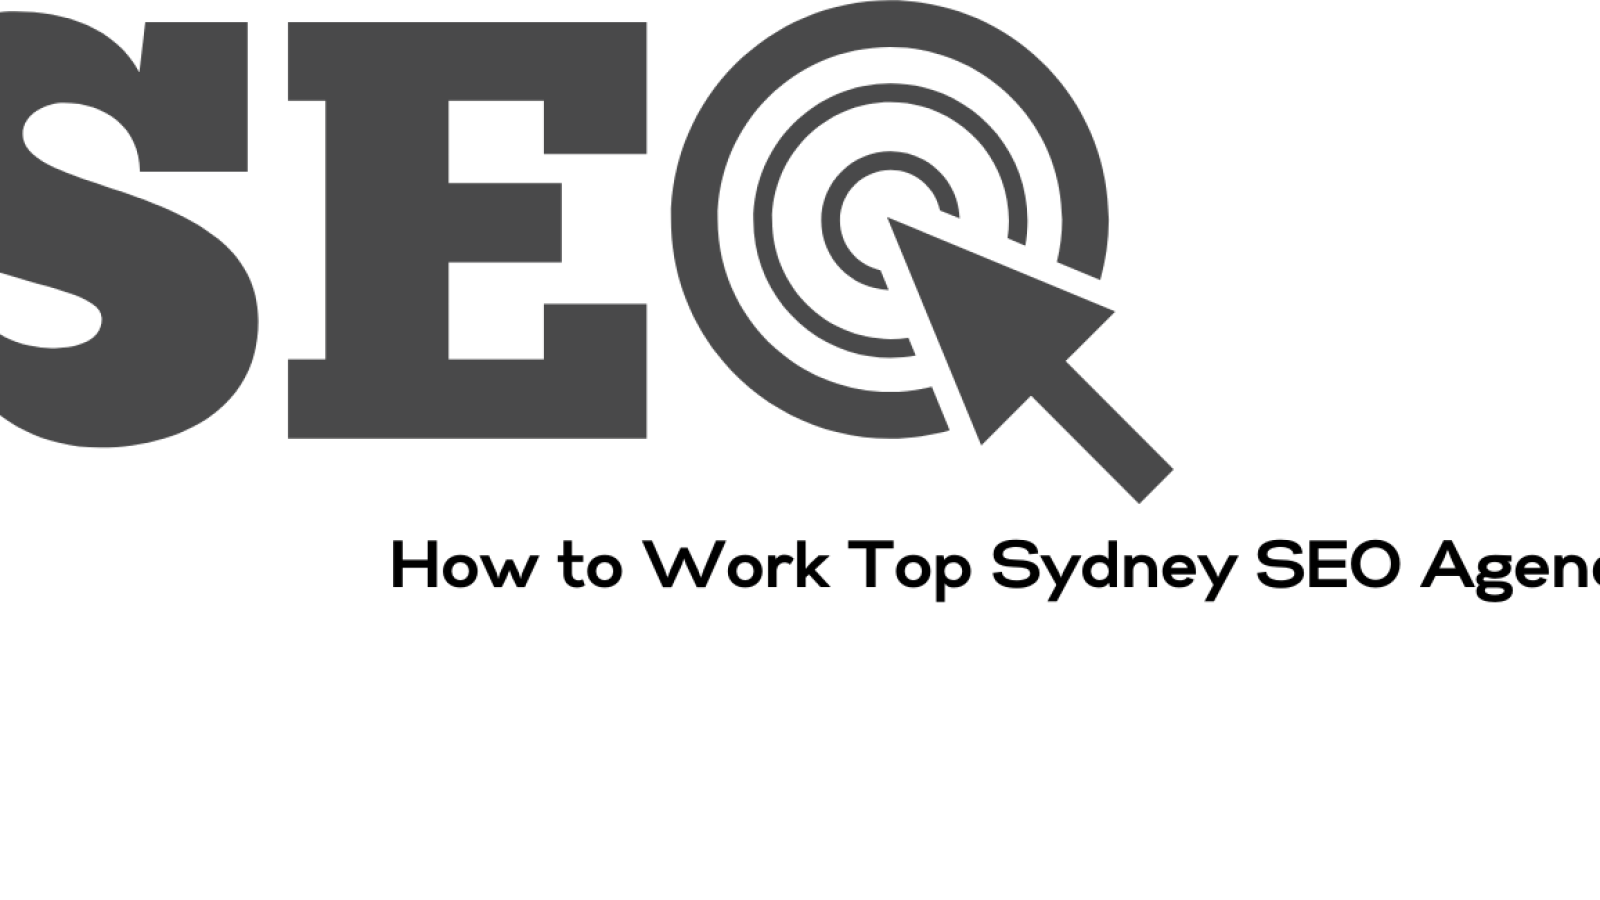 How to Work Top Sydney SEO Agency